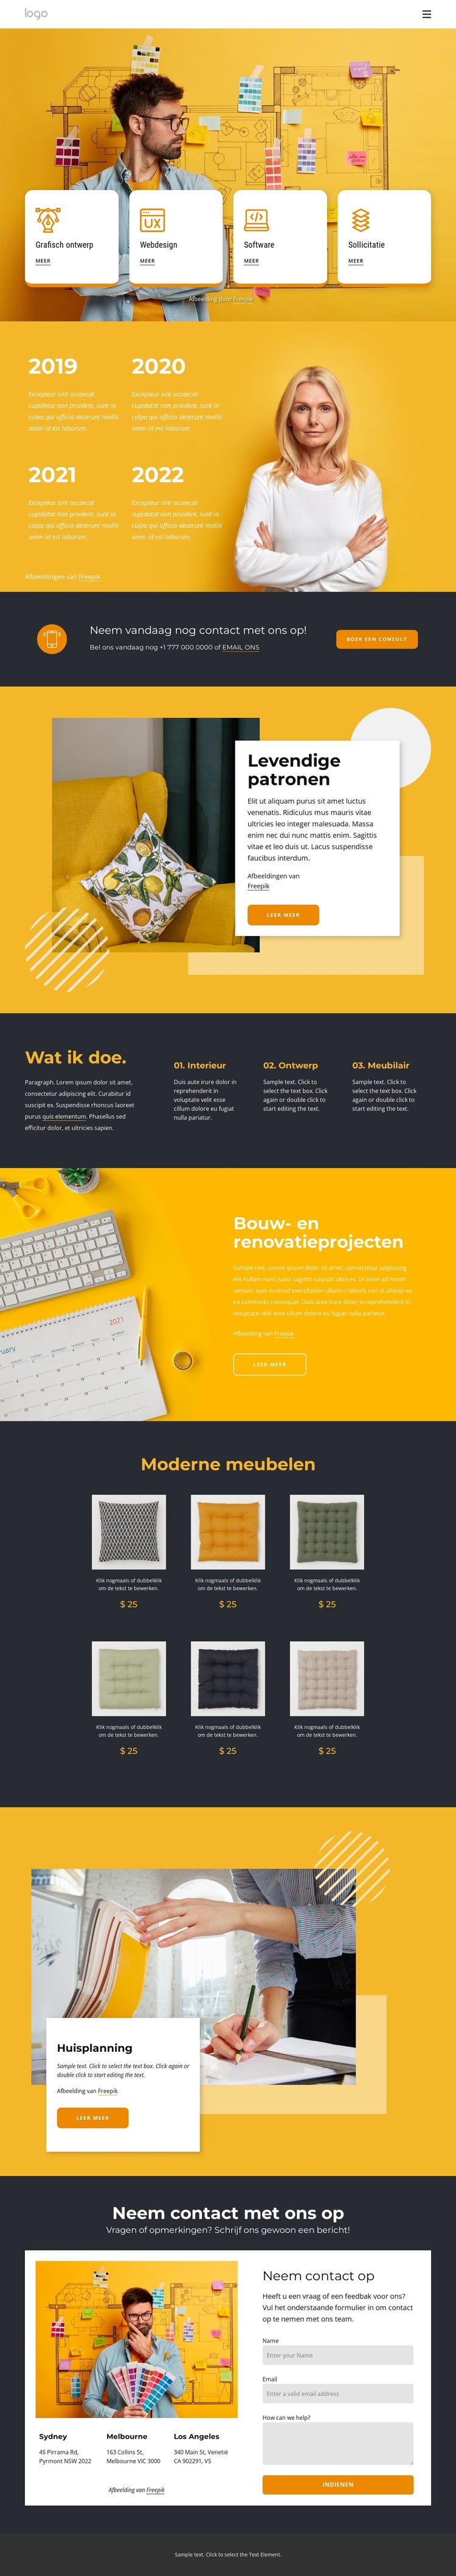 Modern ontwerpbureau WordPress-thema